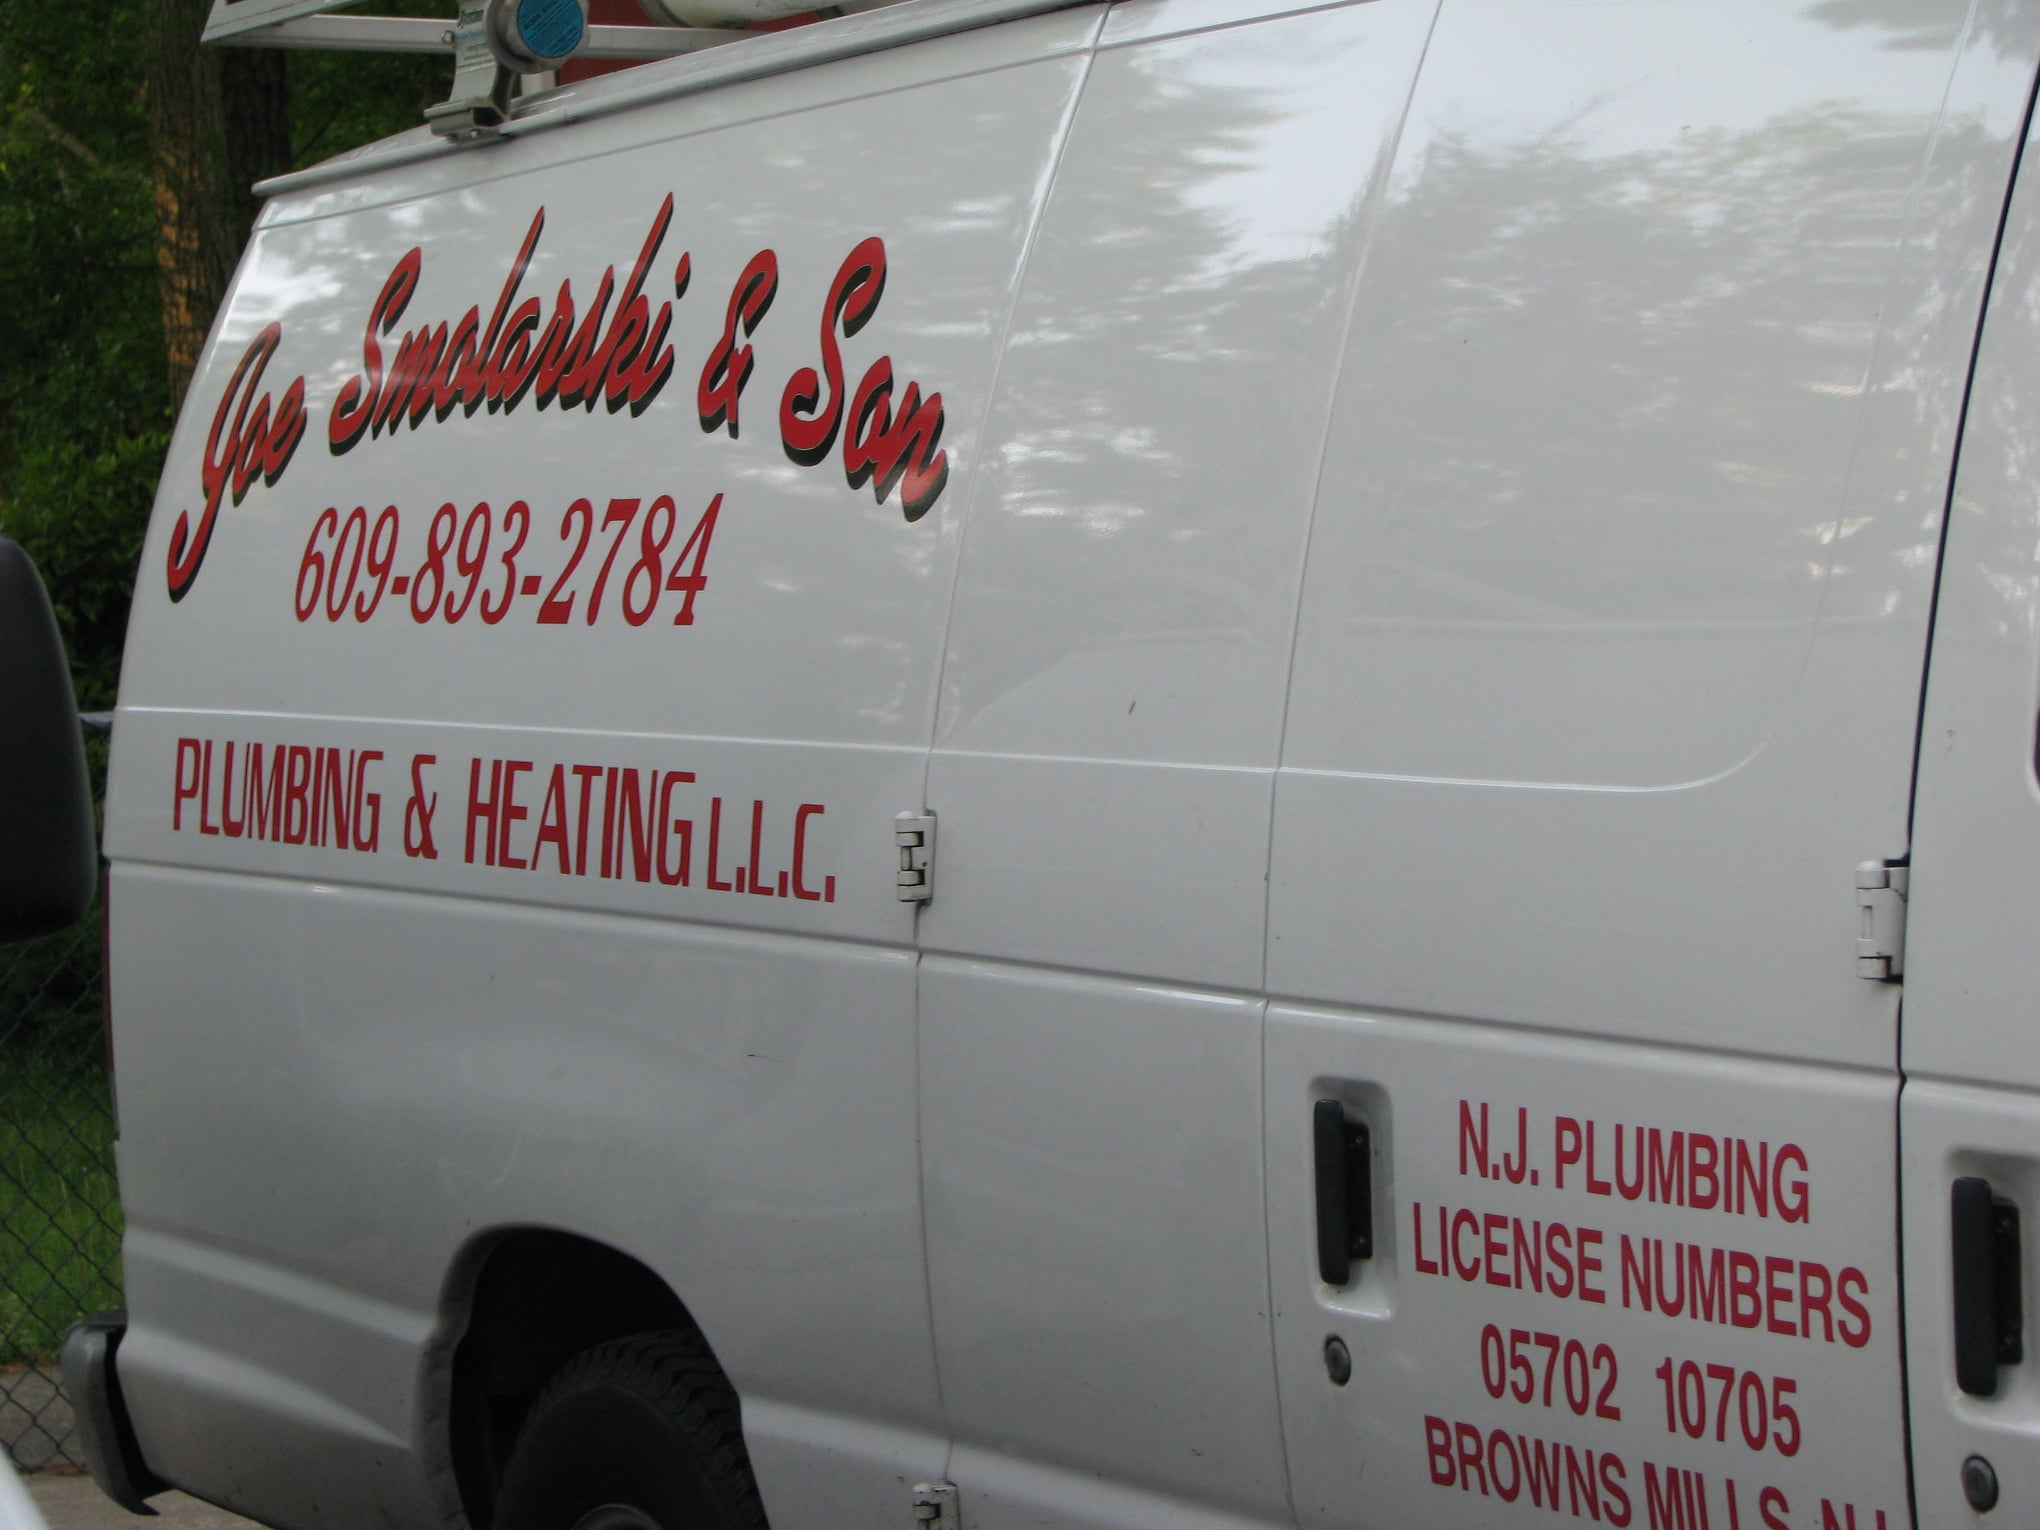 Joe Smolarski & Son Plumbing & Heating LLC 603 Vine St, Browns Mills New Jersey 08015